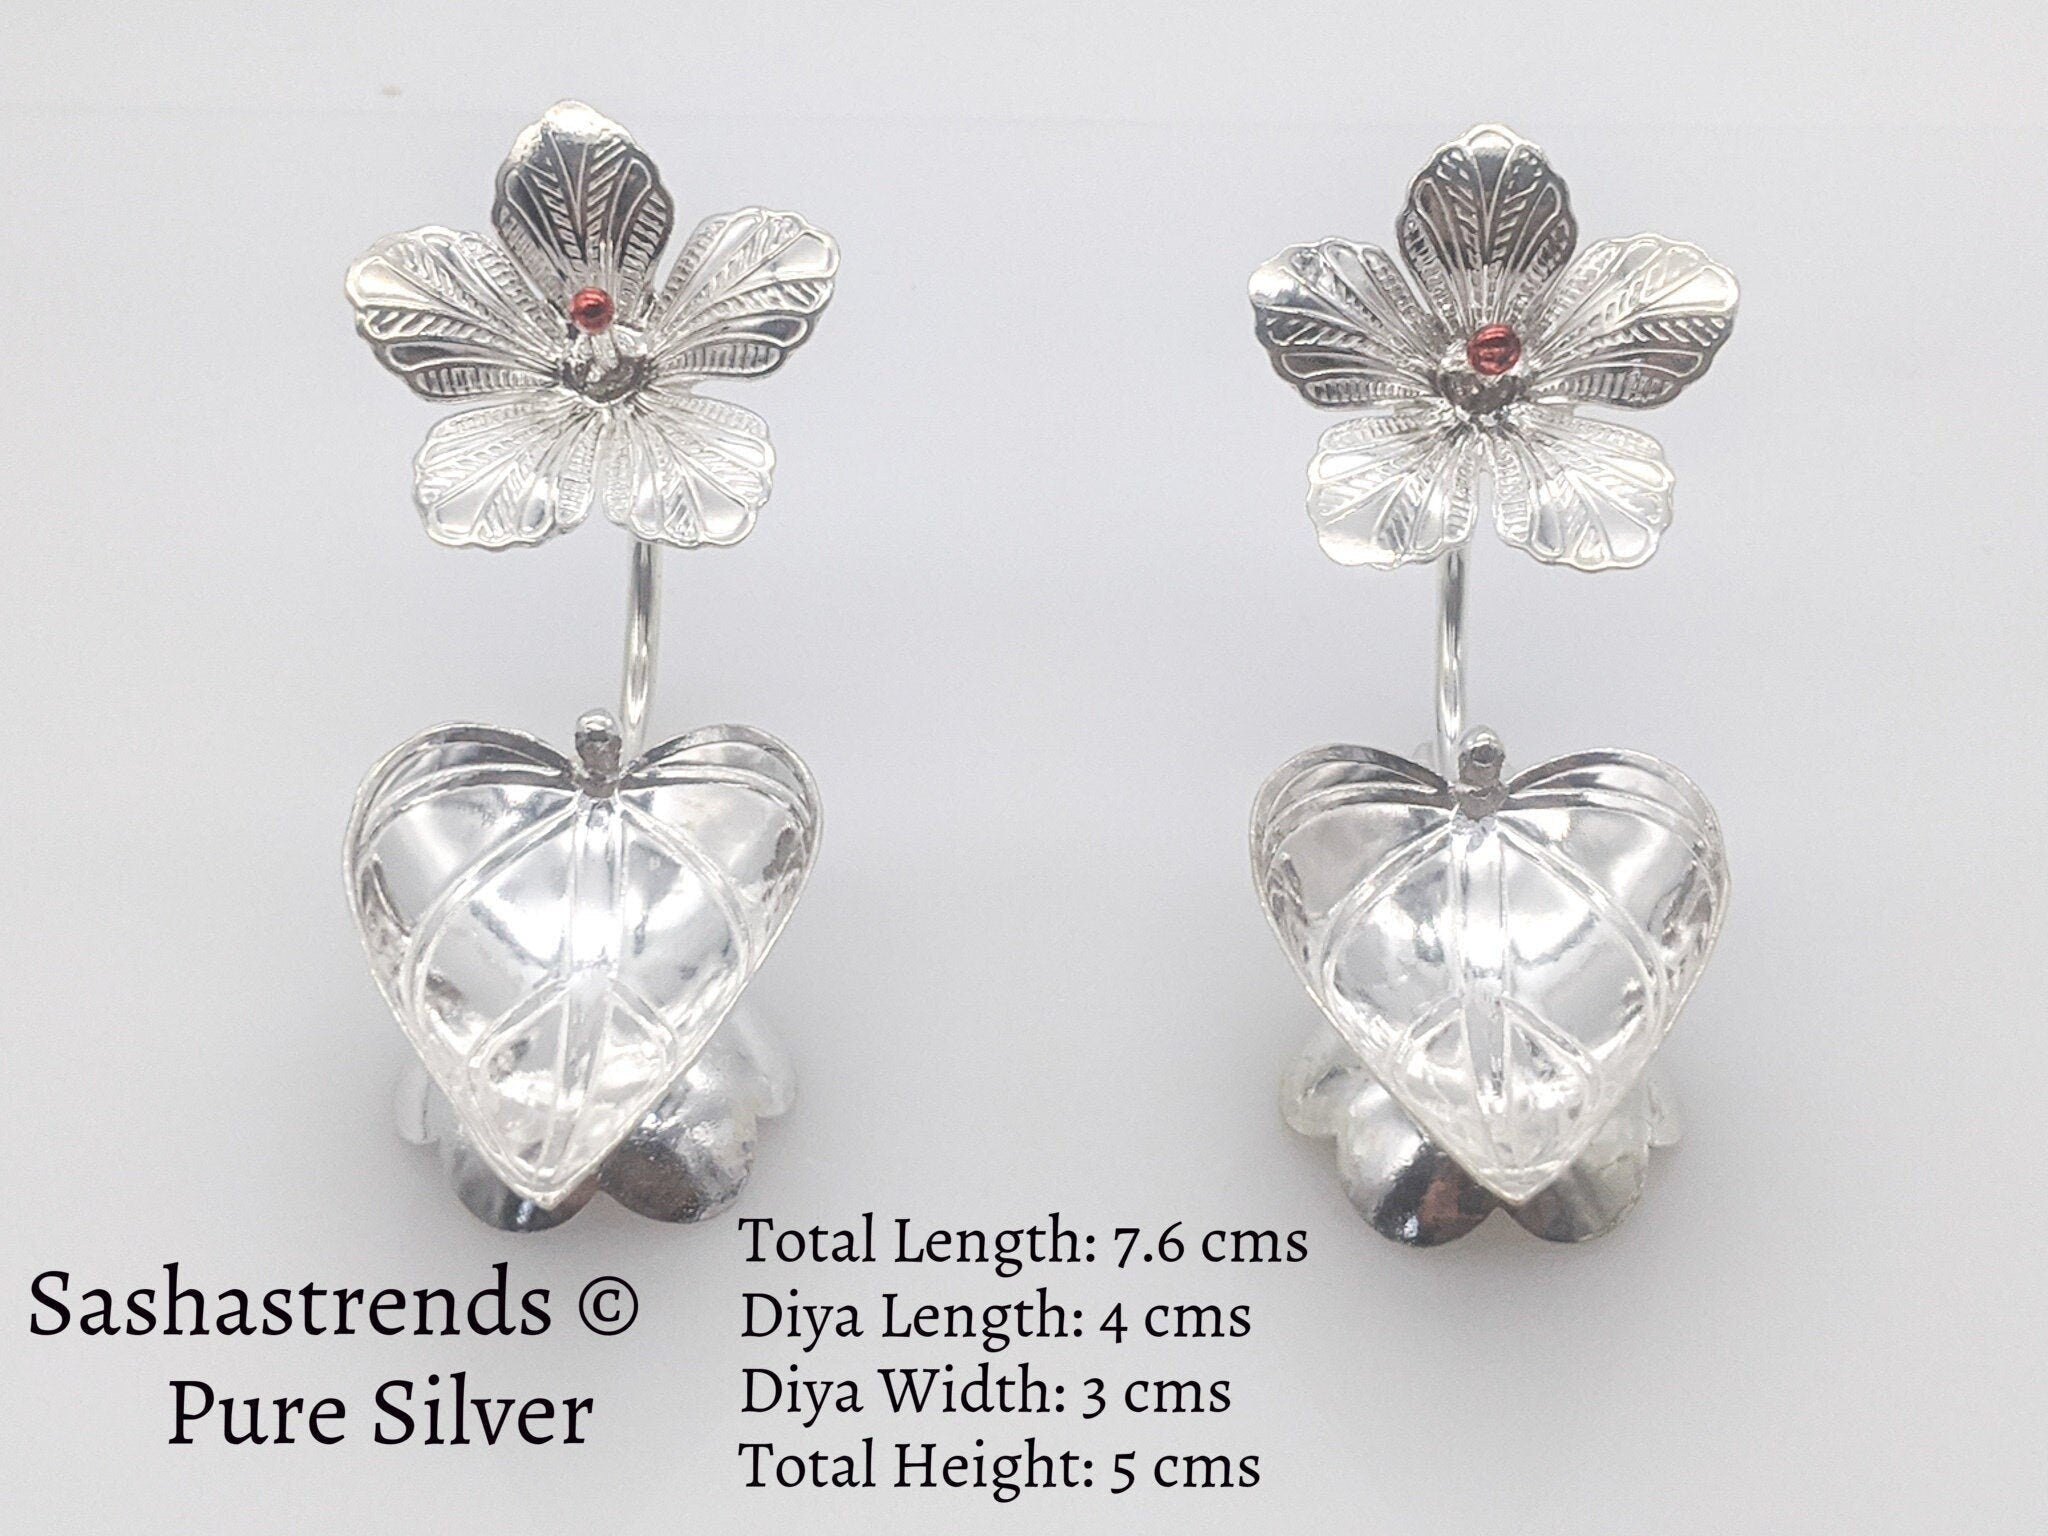 Amazon.com: Navya Craft Handmade Rose Quartz Silver Ring - Sterling Silver  Statement Jewelry for Women - Boho Chic Pink Gemstone Ring - Anniversary  Valentine's Day Gift : Handmade Products